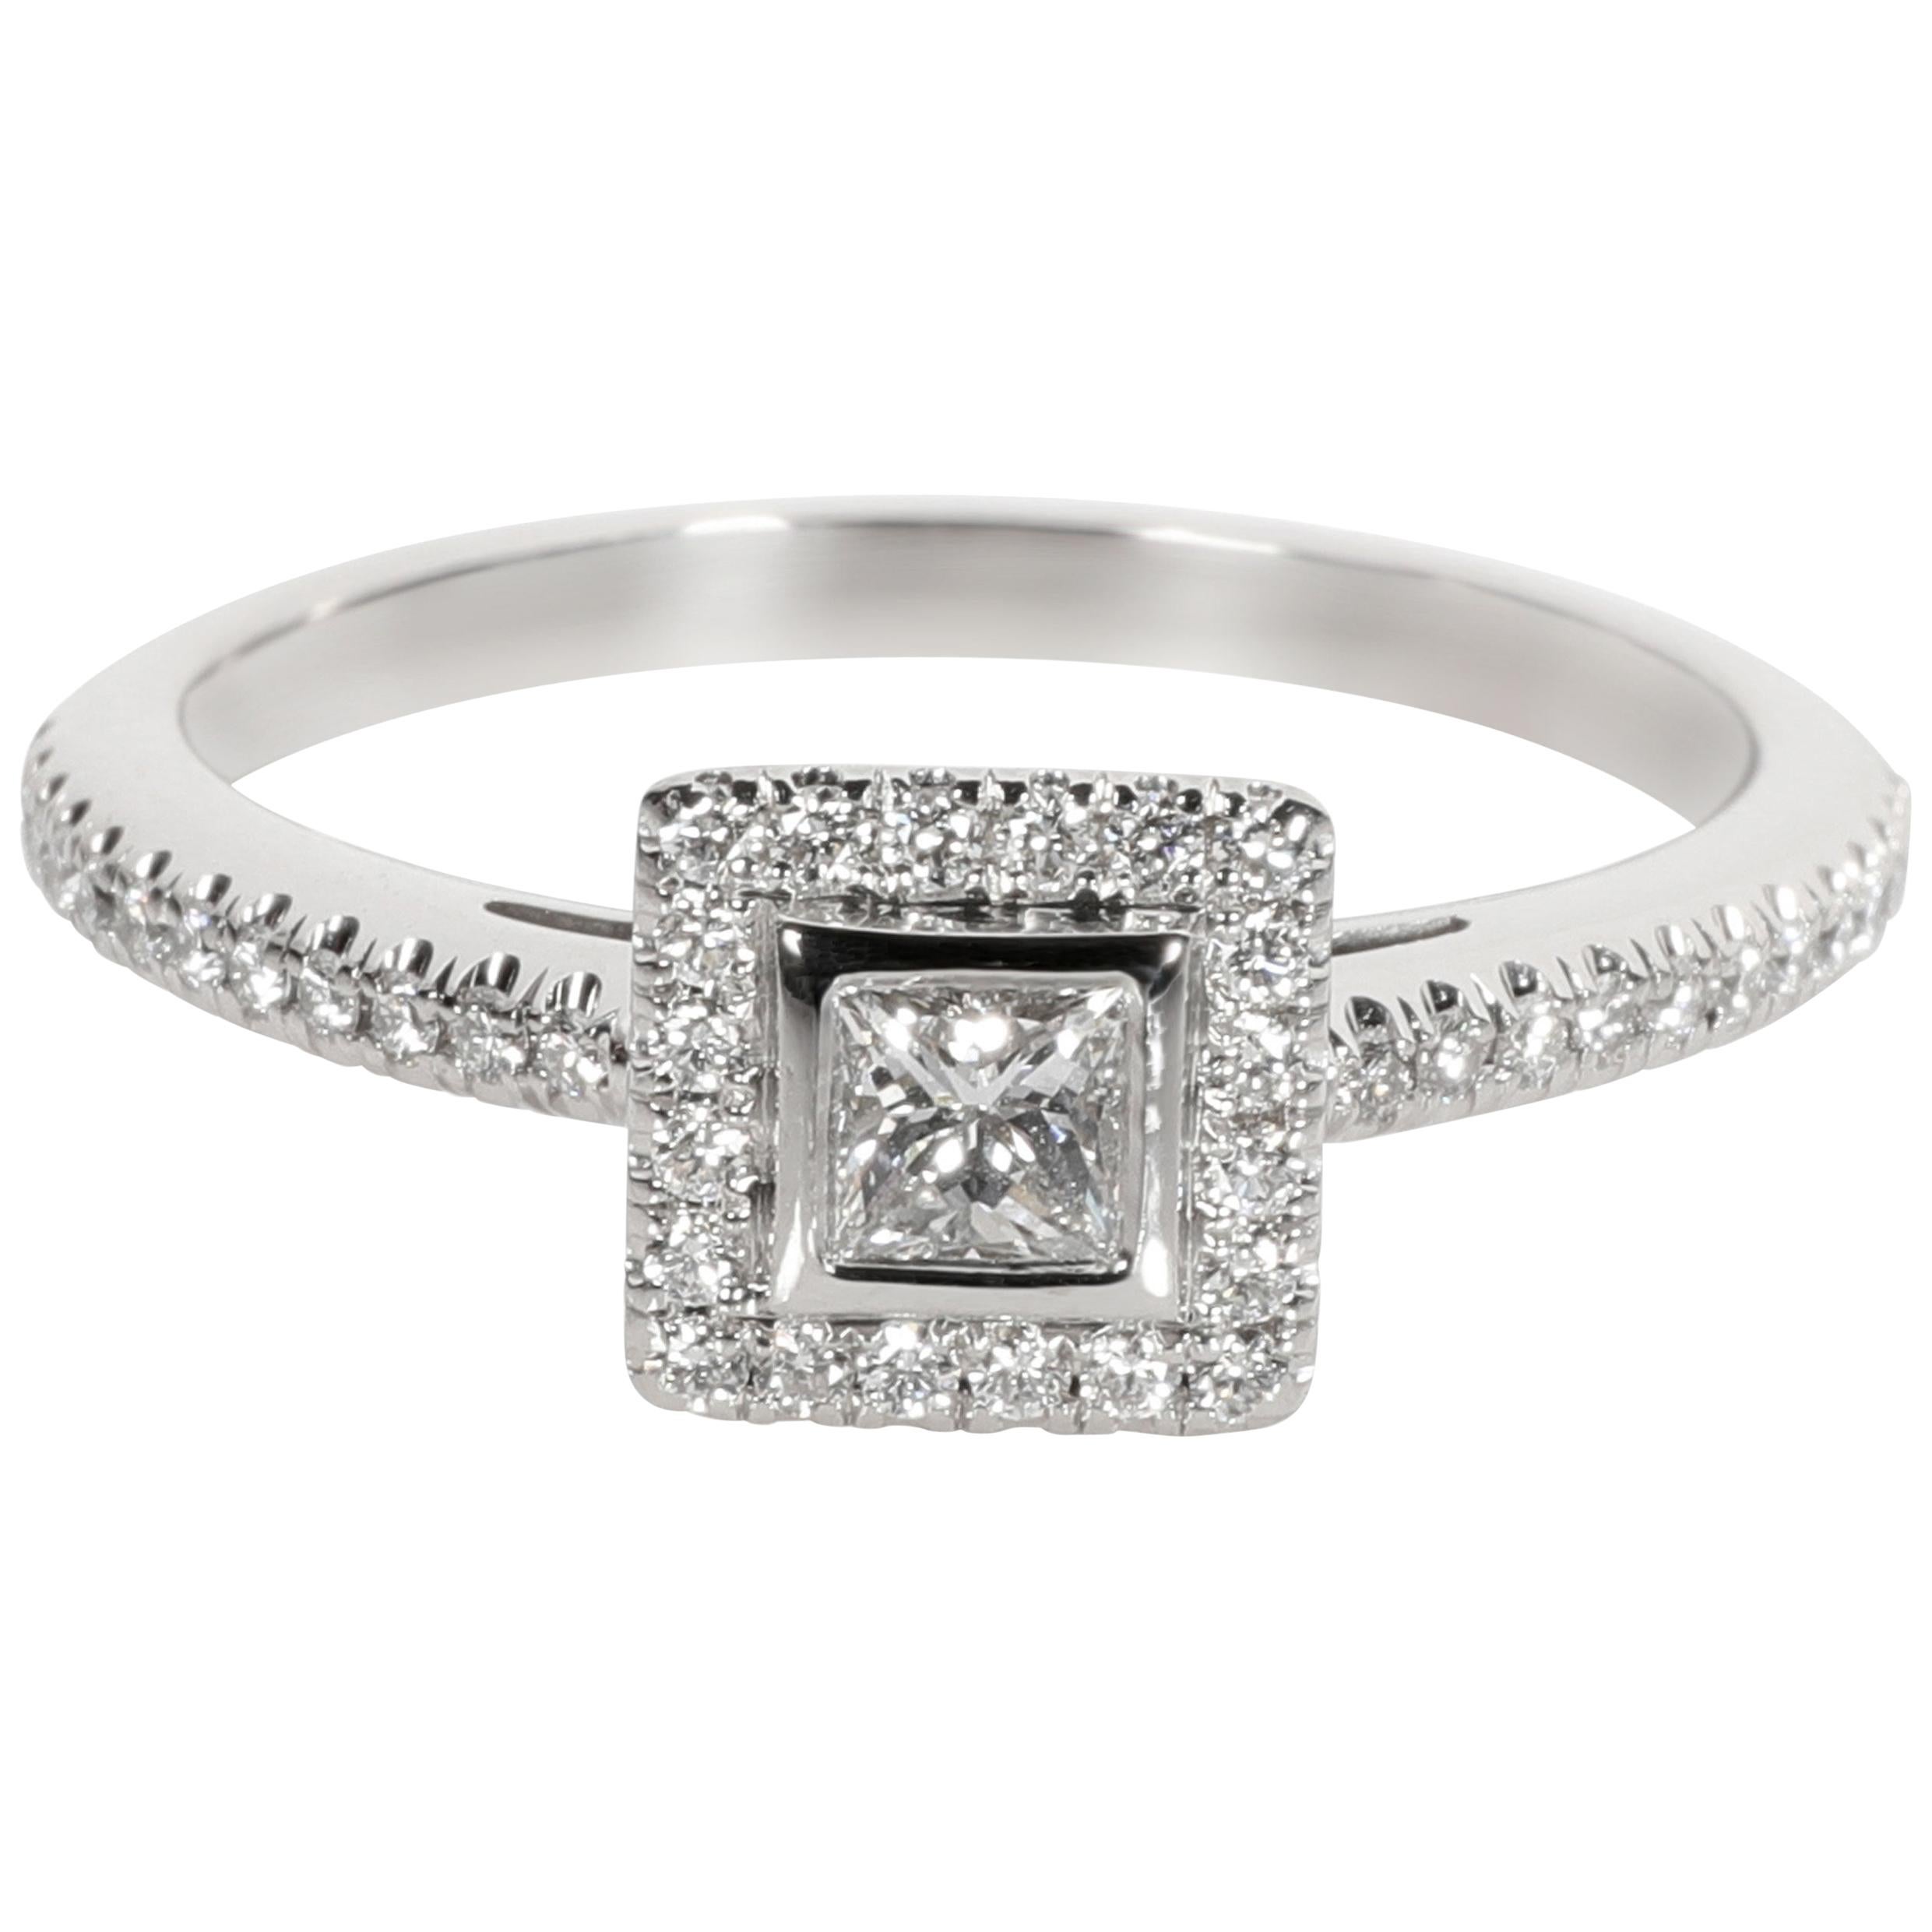 Tiffany & Co. Grace Princess Diamond Ring in Platinum 0.27 Carat